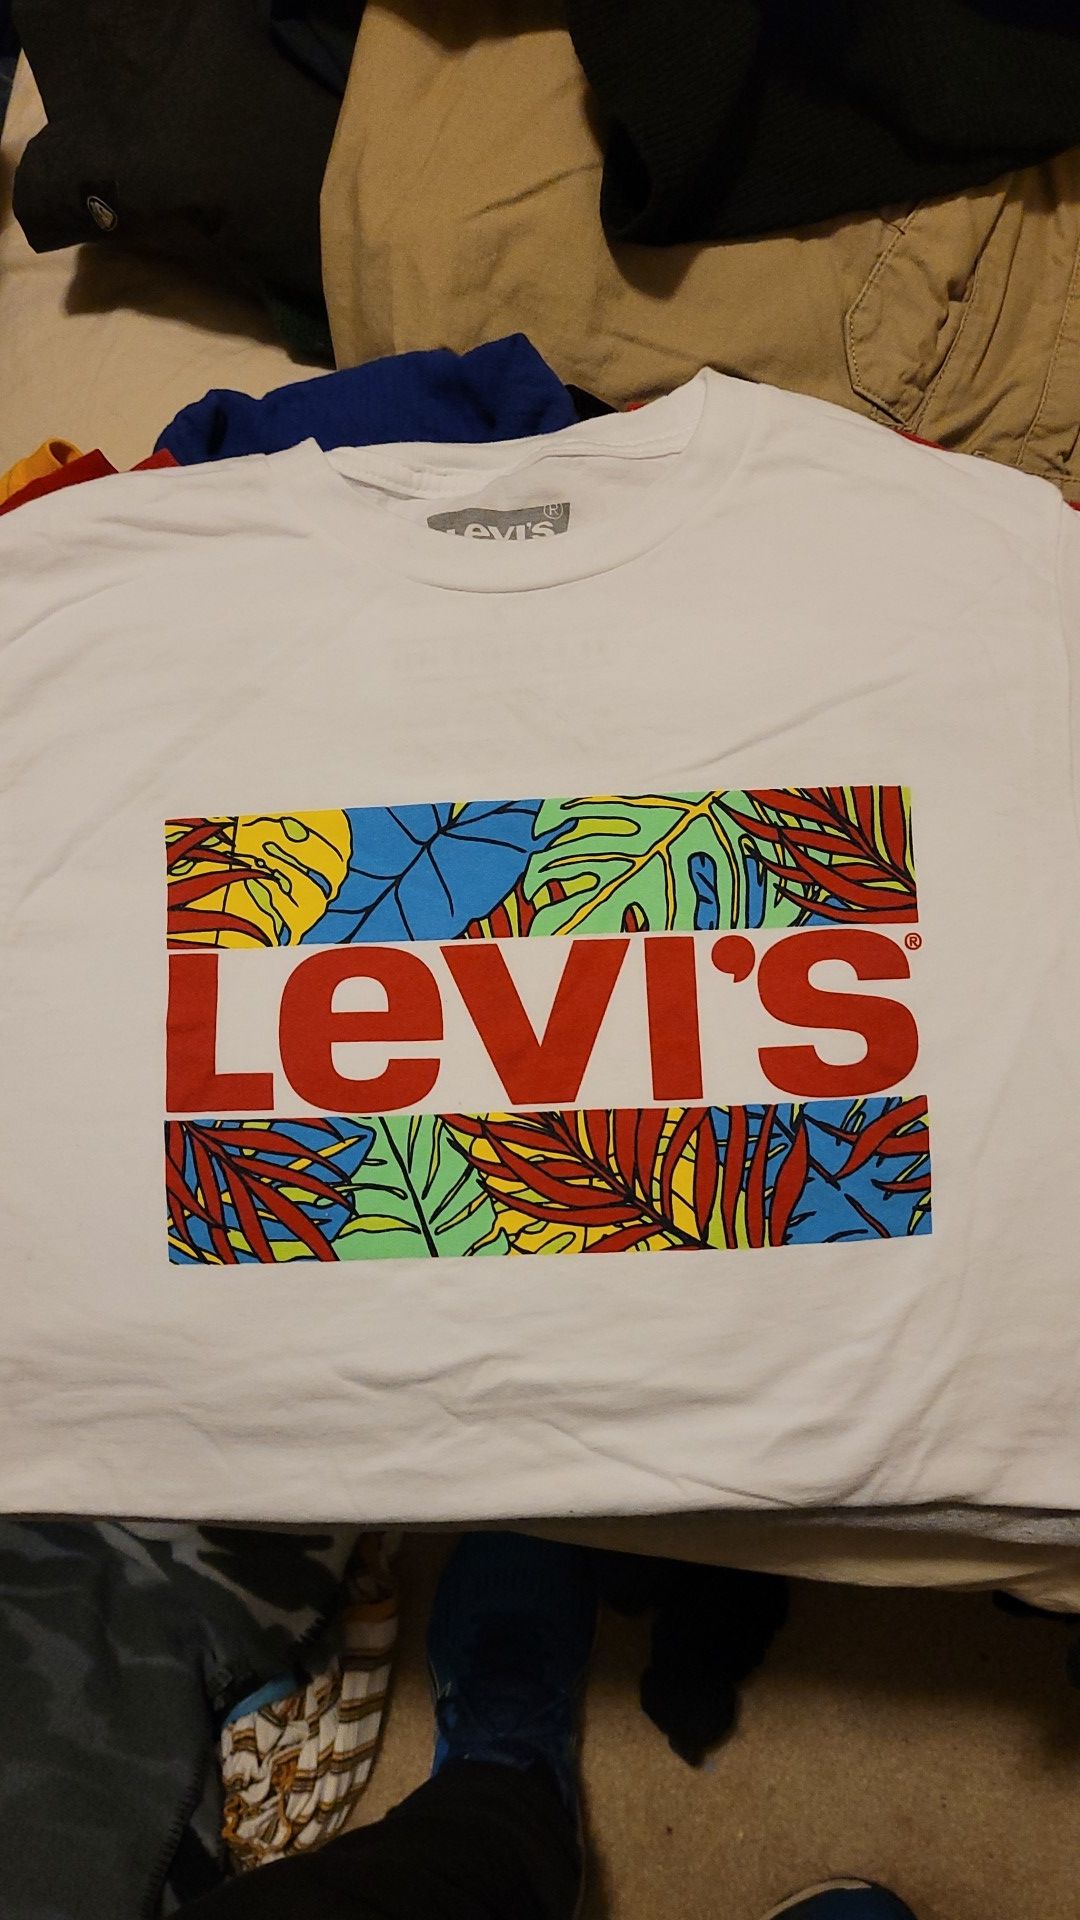 Levi's shirt